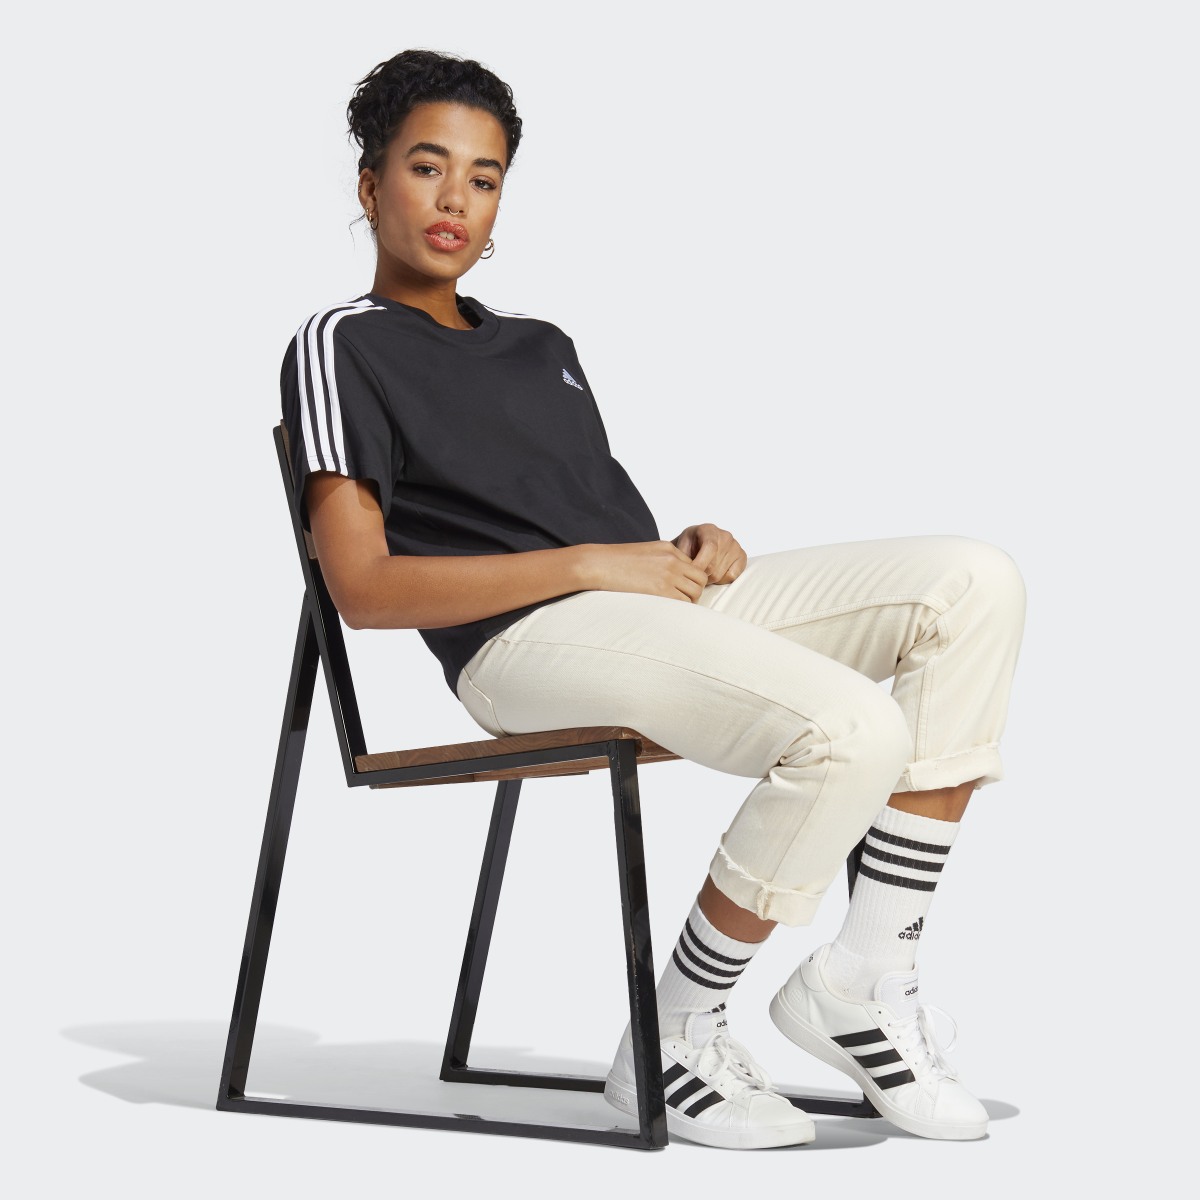 Adidas T-shirt Essentials 3-Stripes Single Jersey Crop. 4